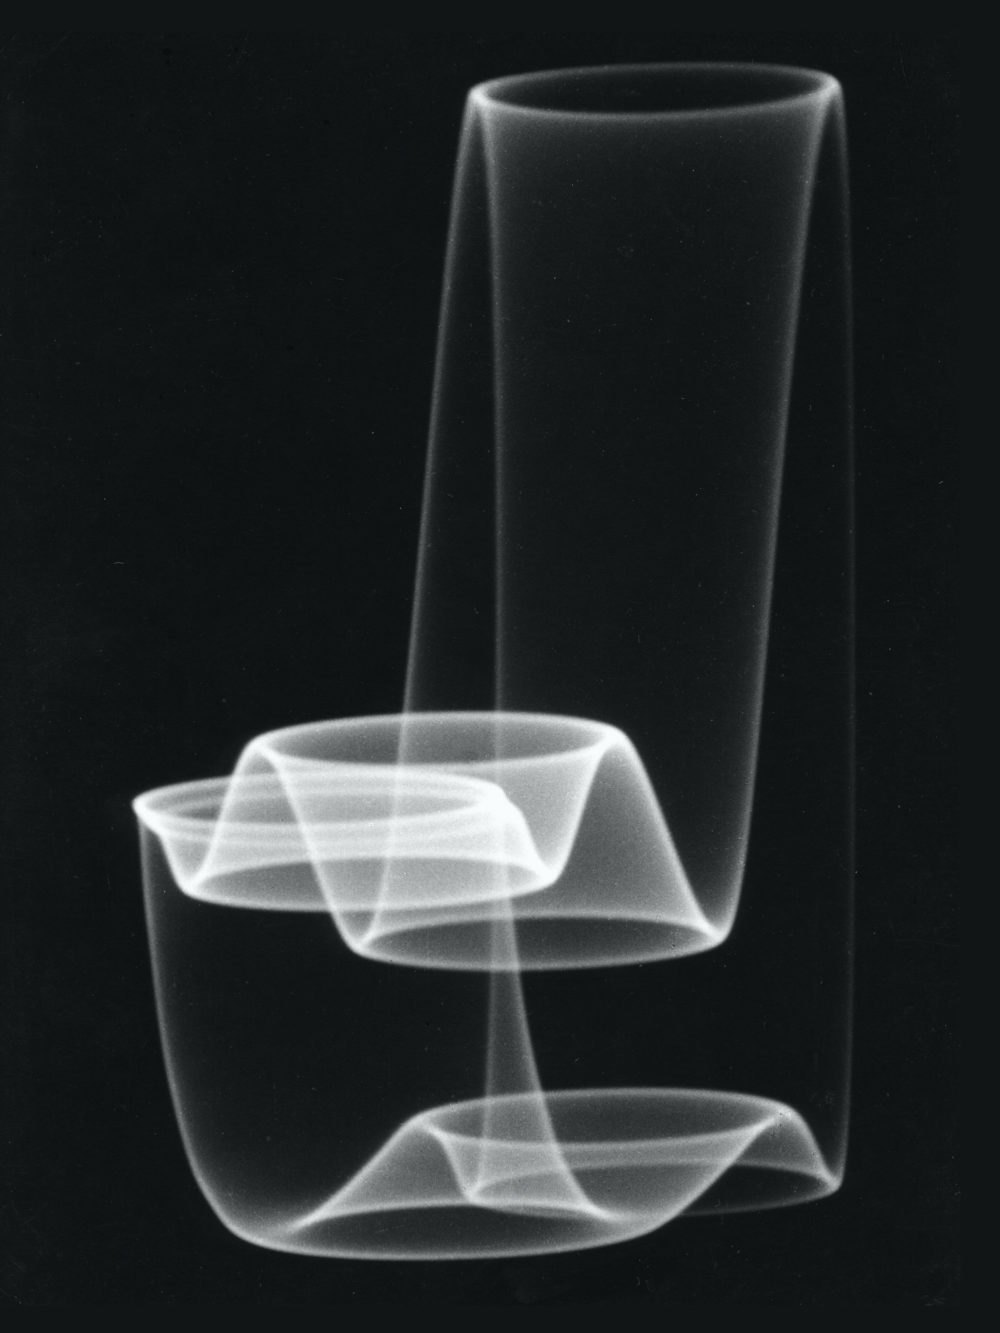 Herbert W. Franke, Dance of the Electrons, photograph, 40 x 30 cm, 1961/62